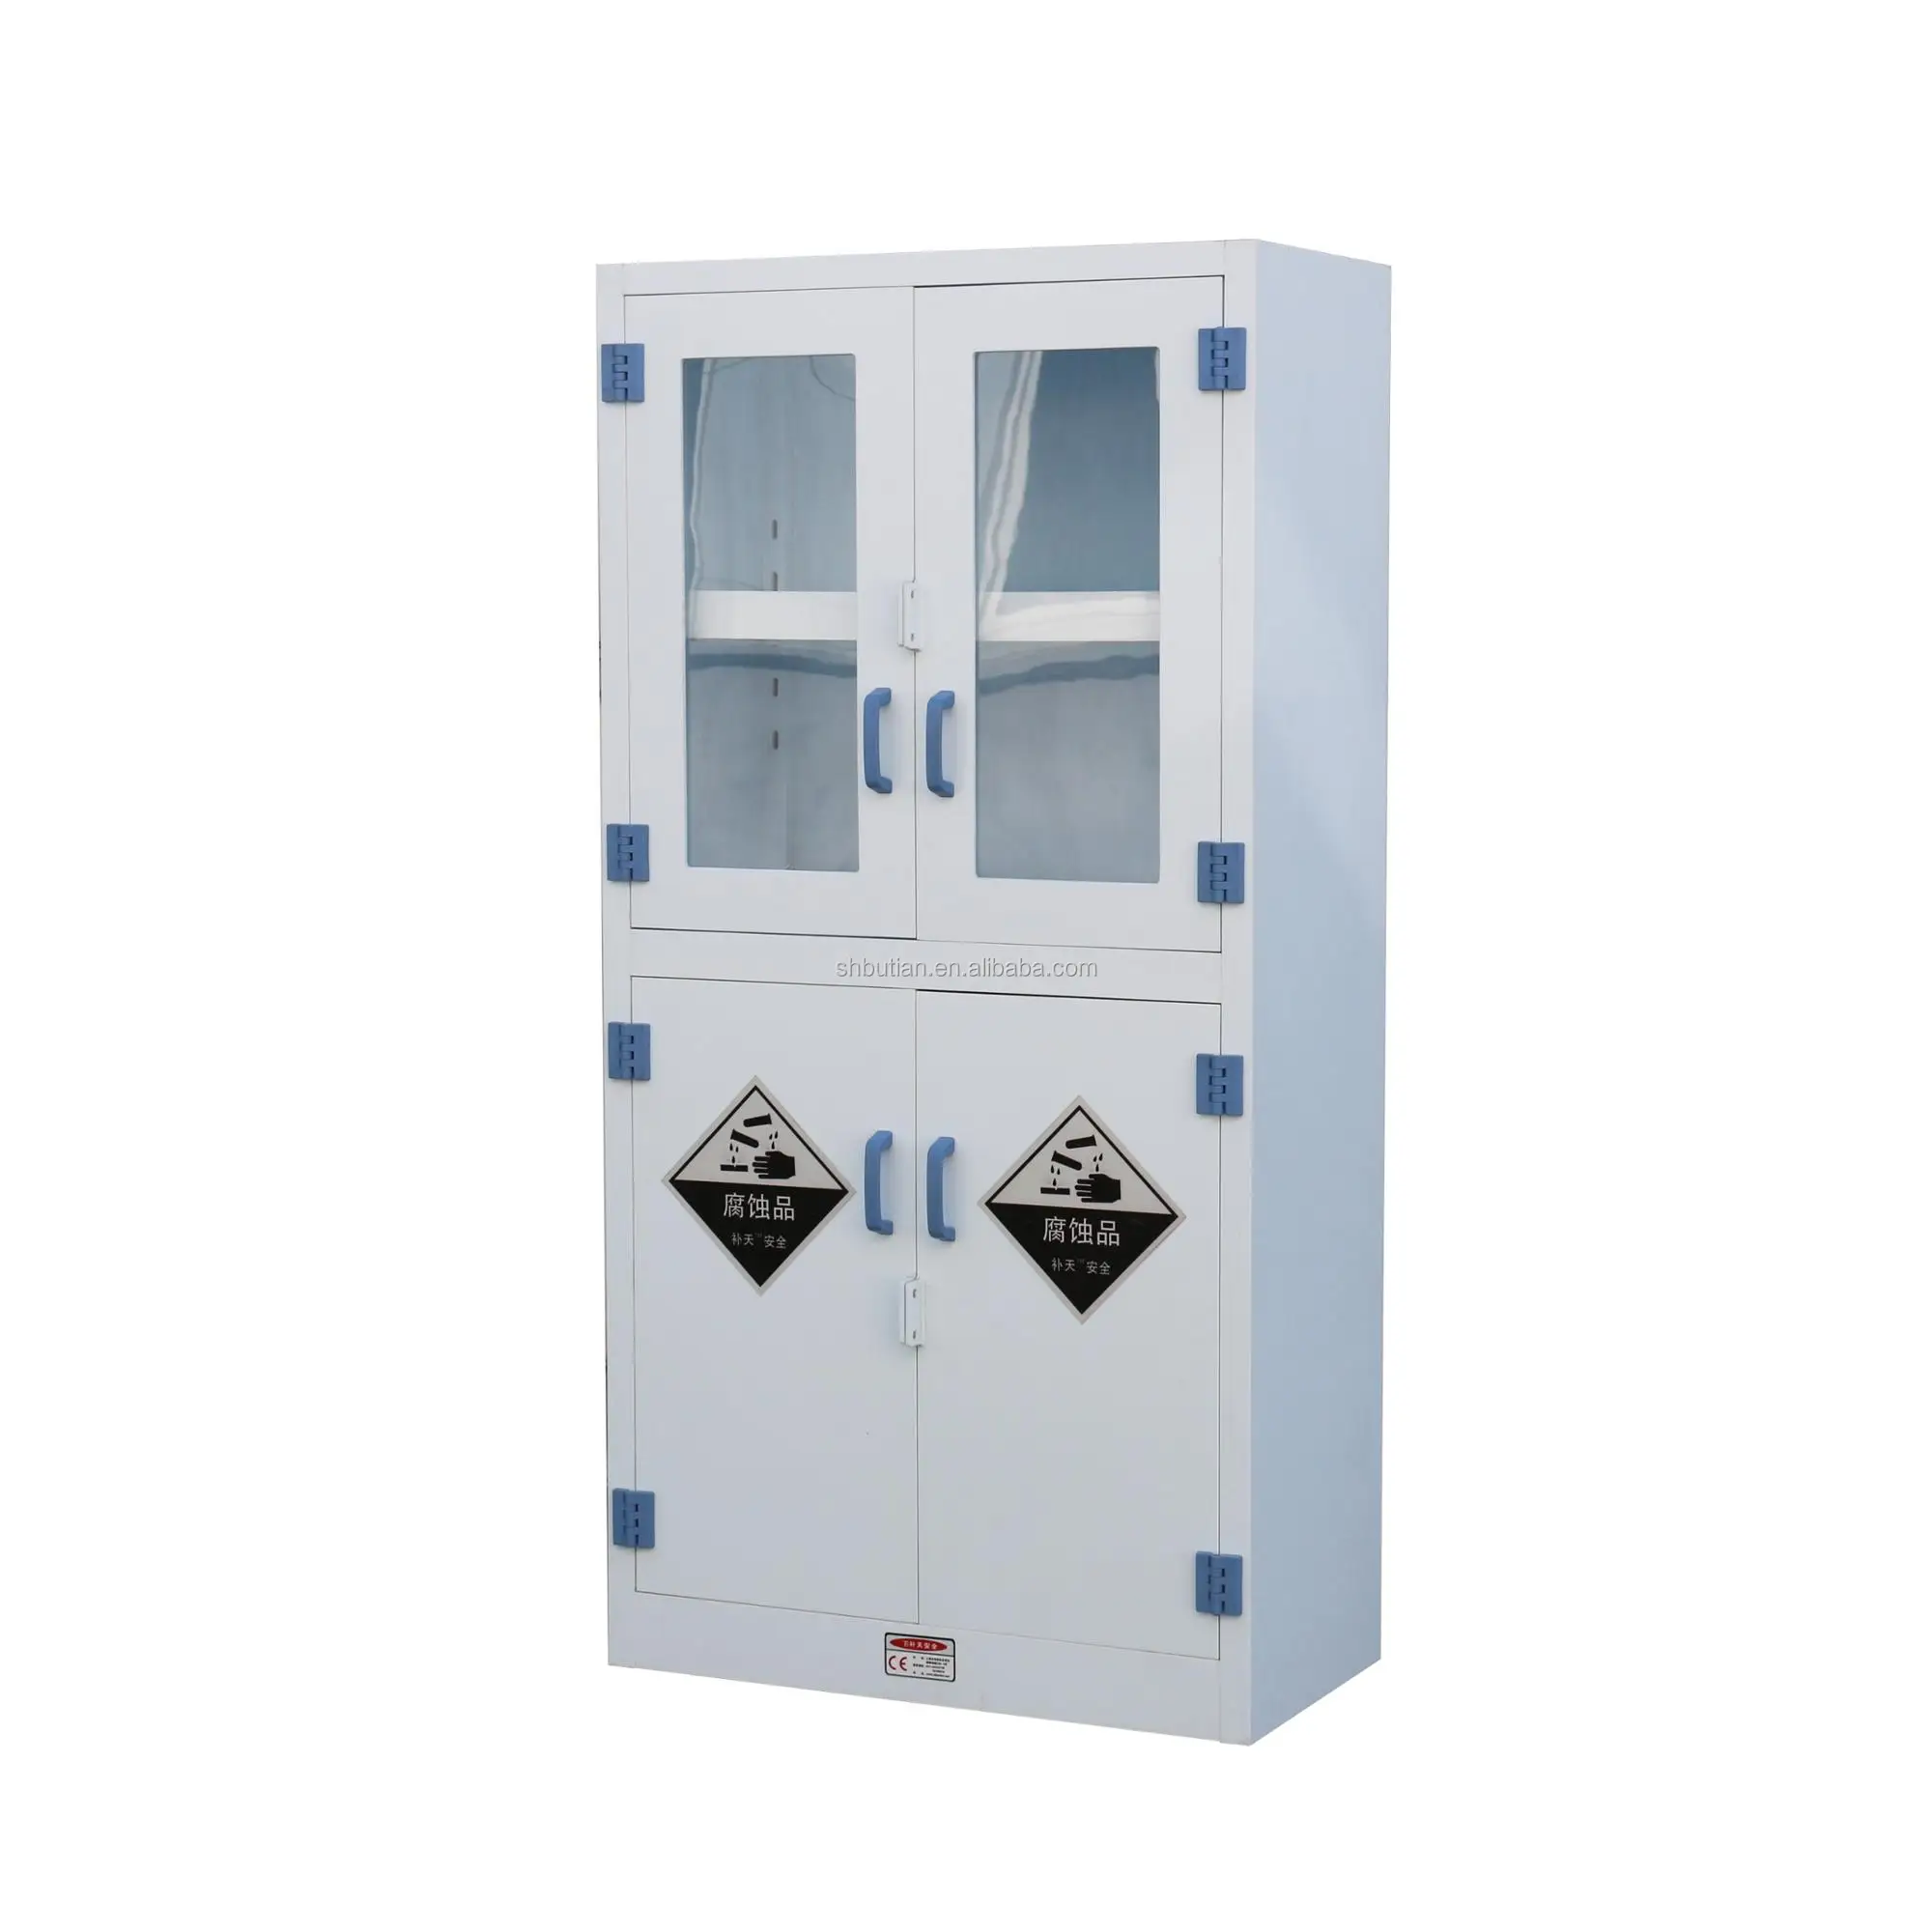 4 Doors Safety Chemical Storage Cabinet Buy Cabinet Medicine